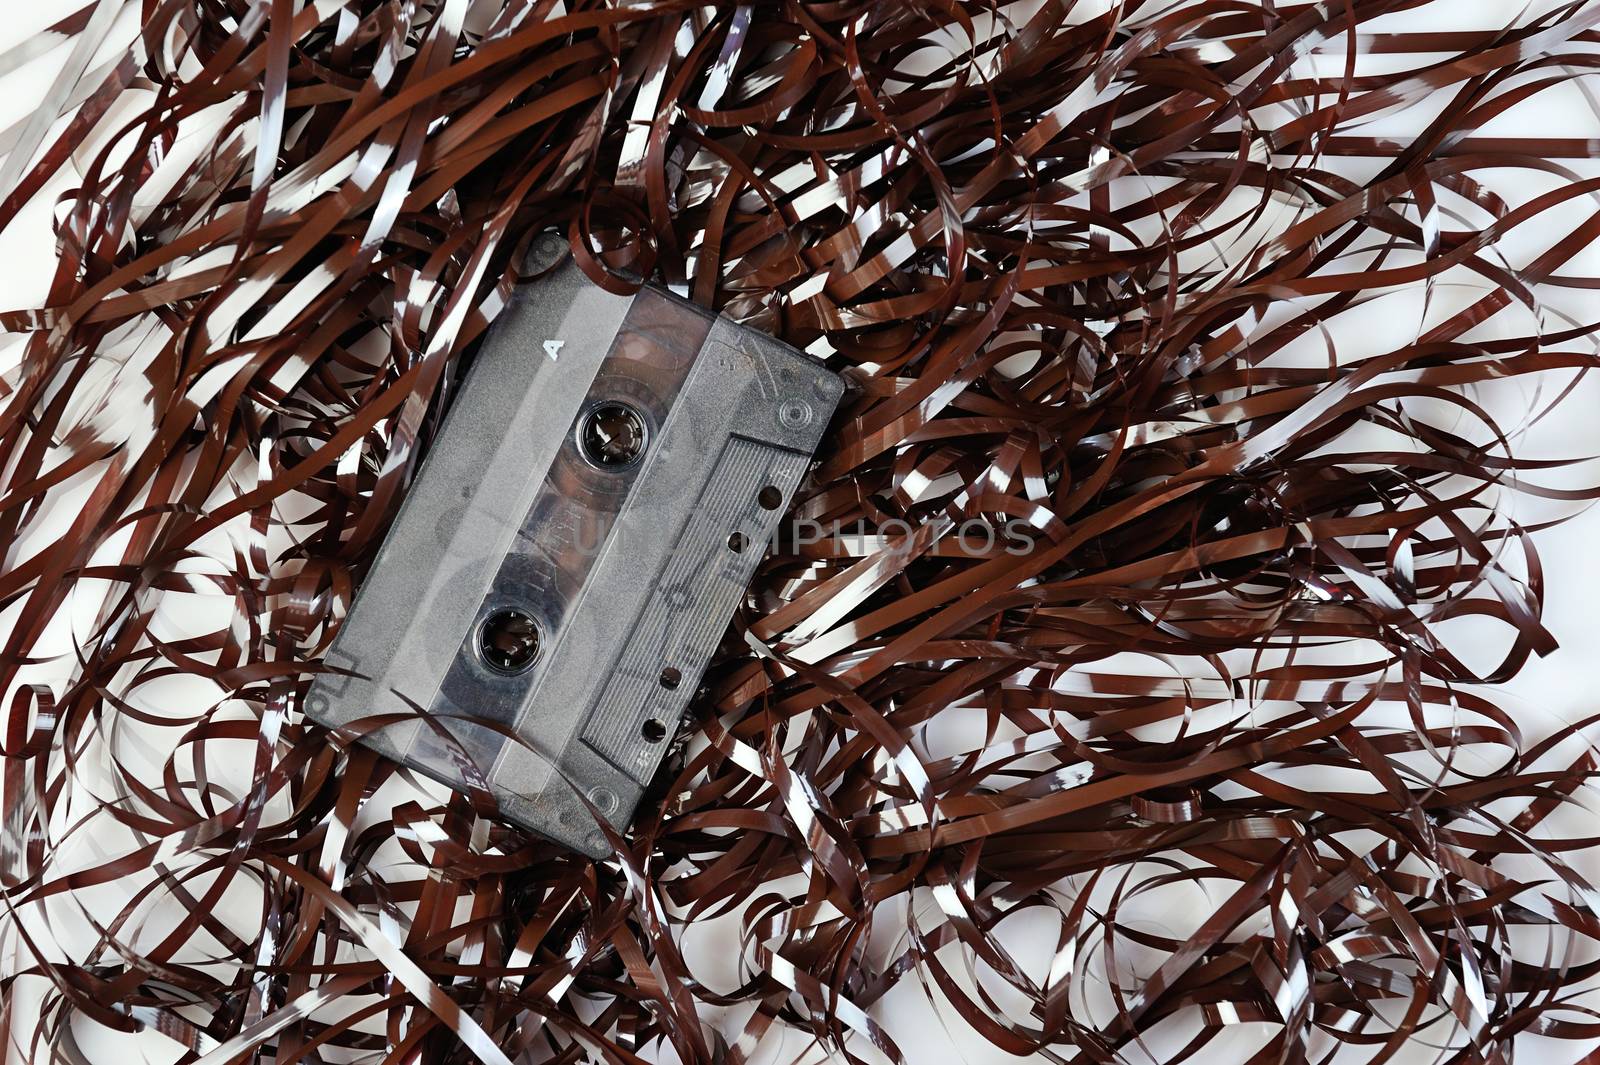 Audio casette with tape by dimarik